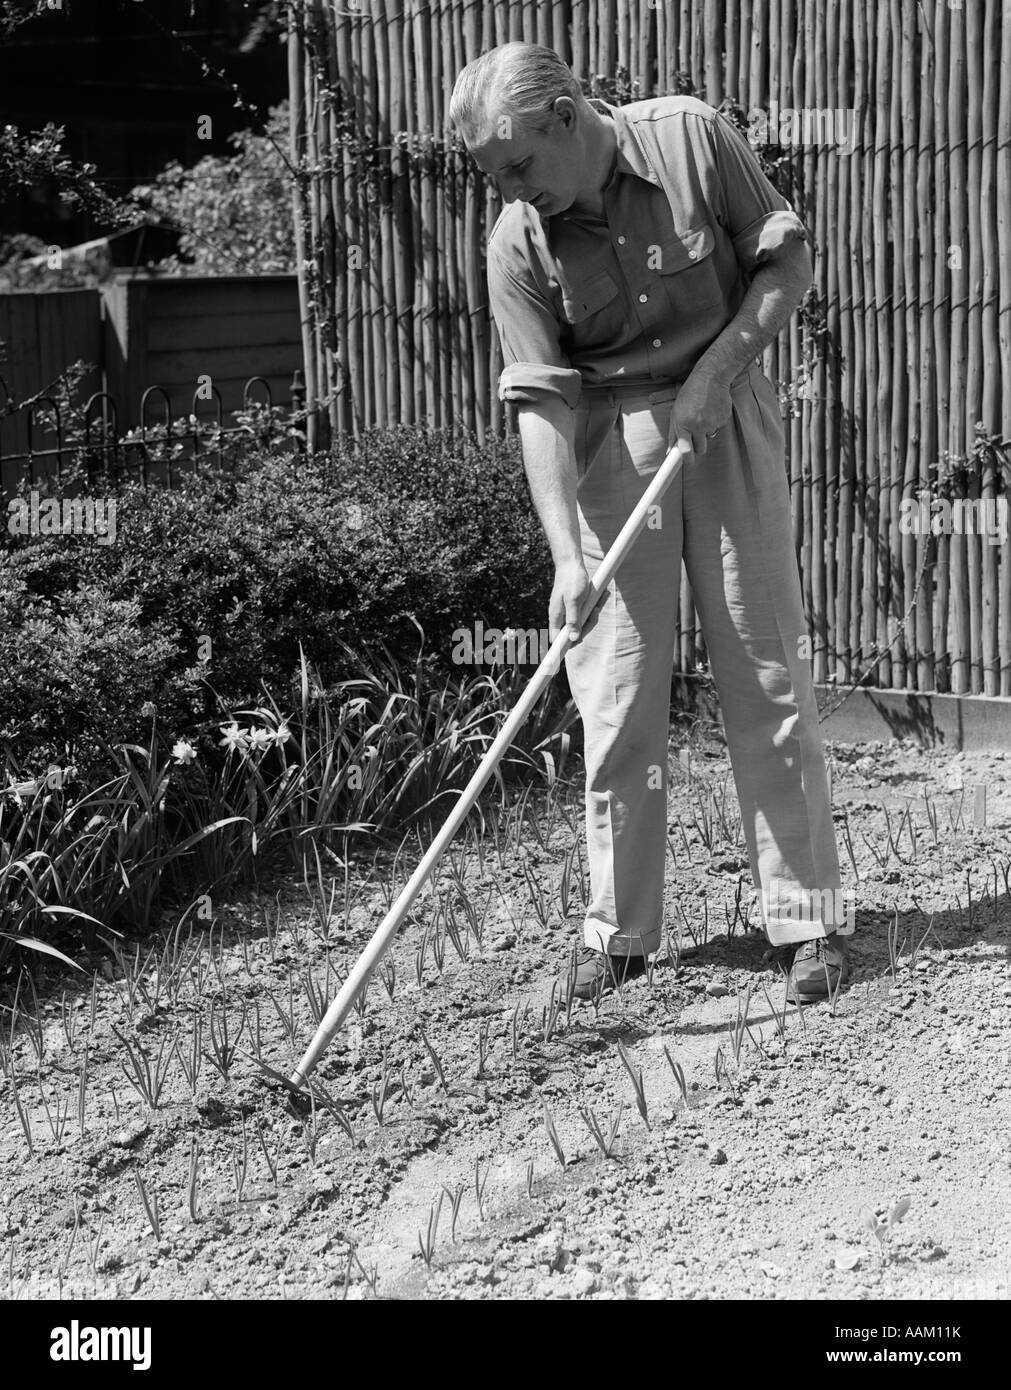 1940s ELDERLY MAN IN GARDEN USING HOE BETWEEN ROWS OF FRESHLY PLANTED BULBS Stock Photo